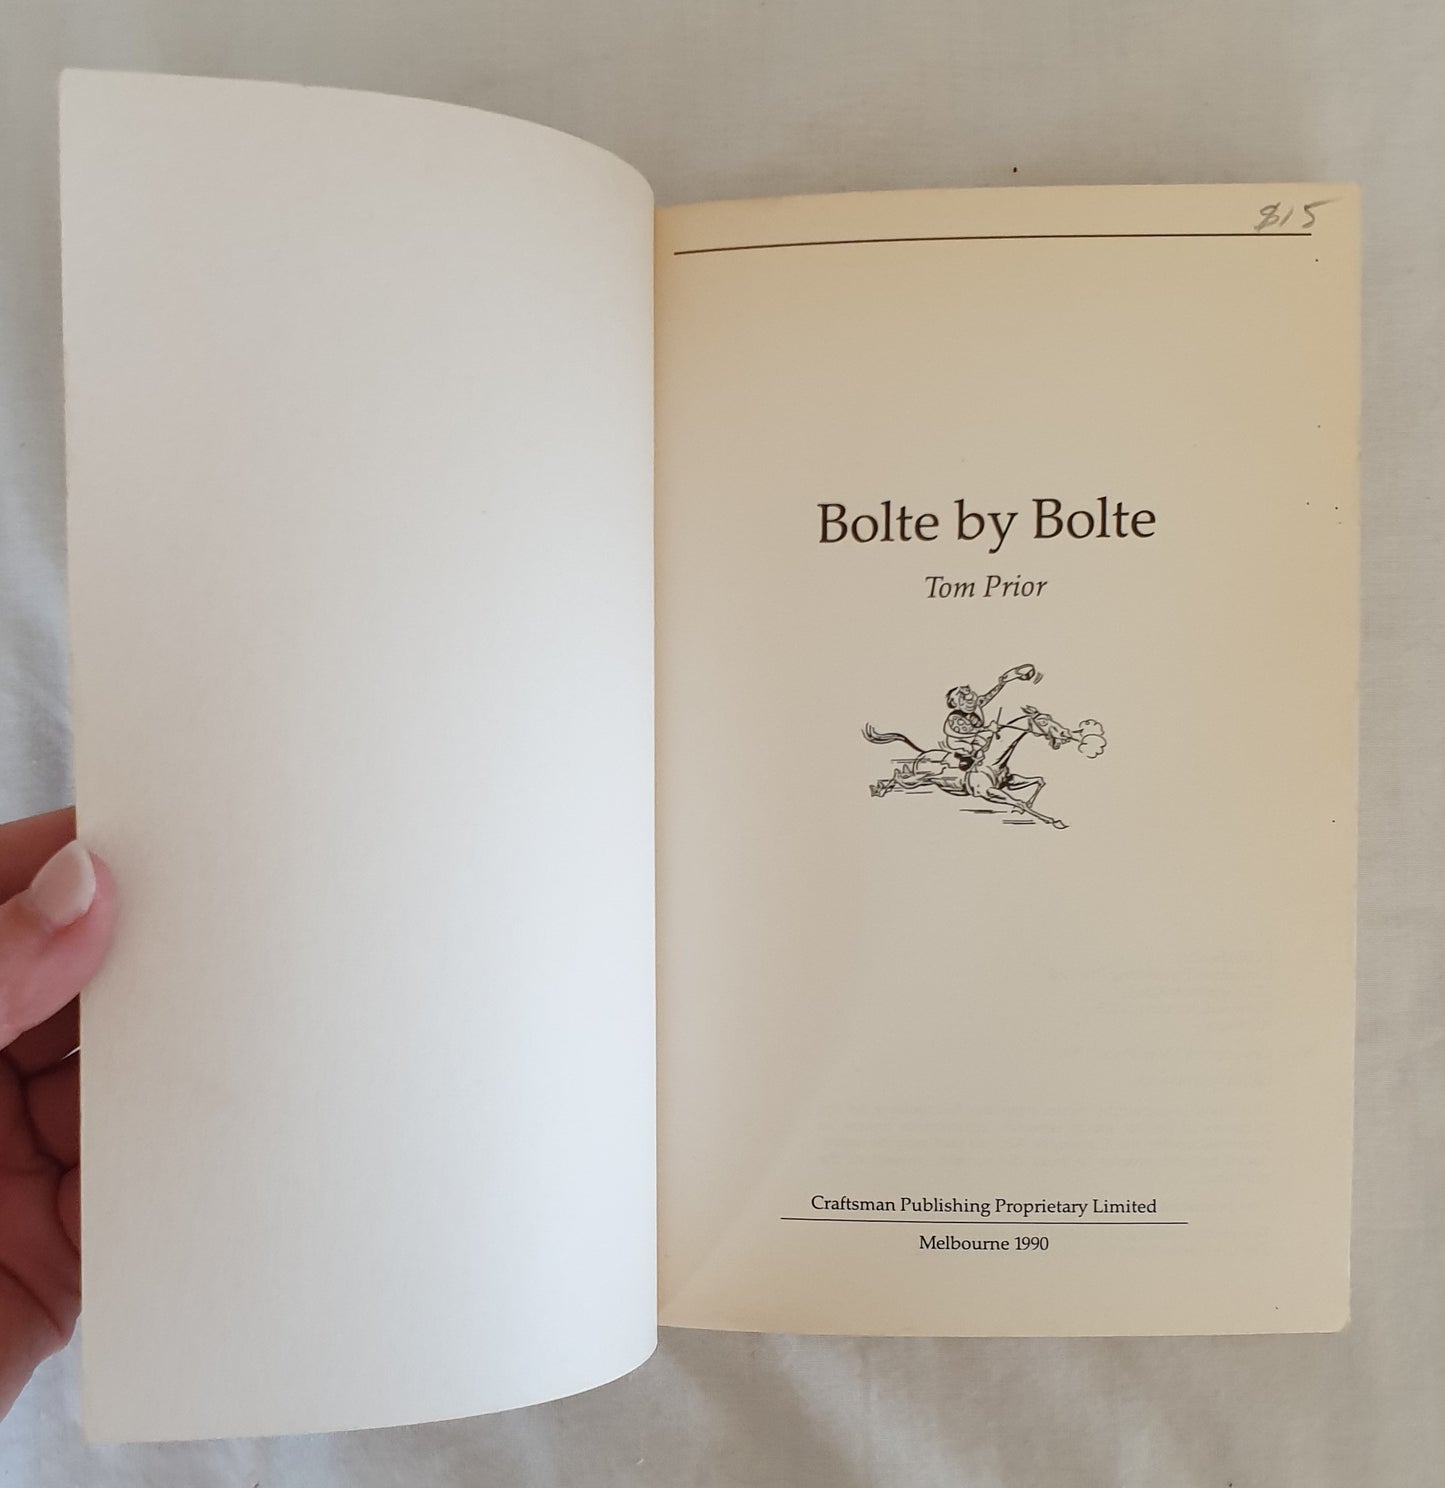 Bolte by Bolte by Tom Prior